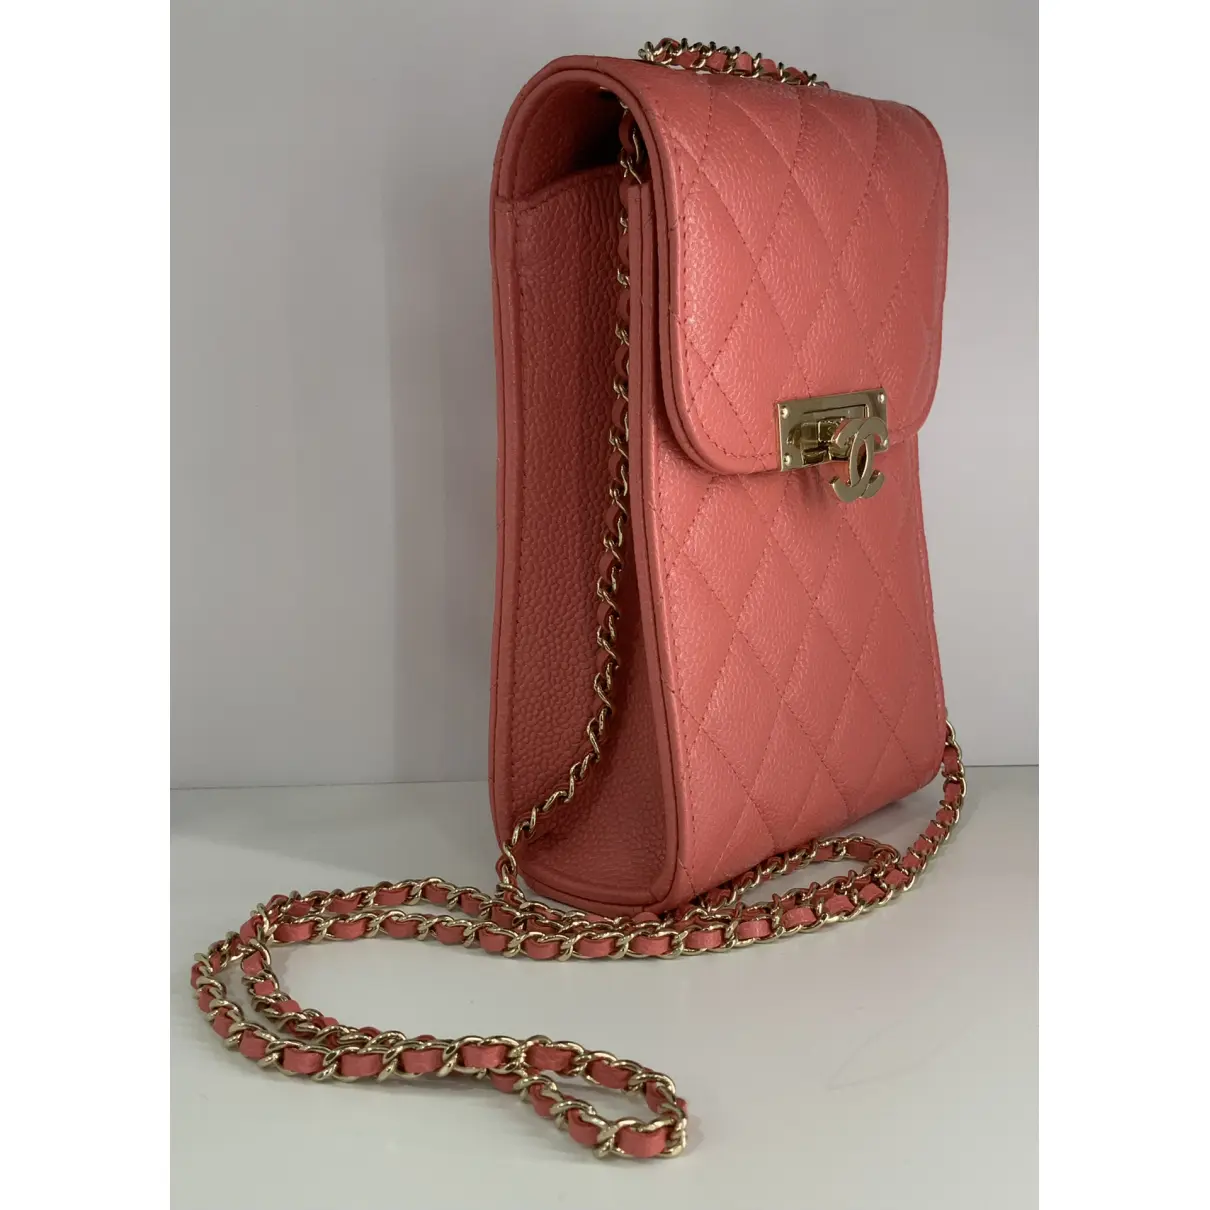 Buy Chanel 2.55 Phone leather crossbody bag online